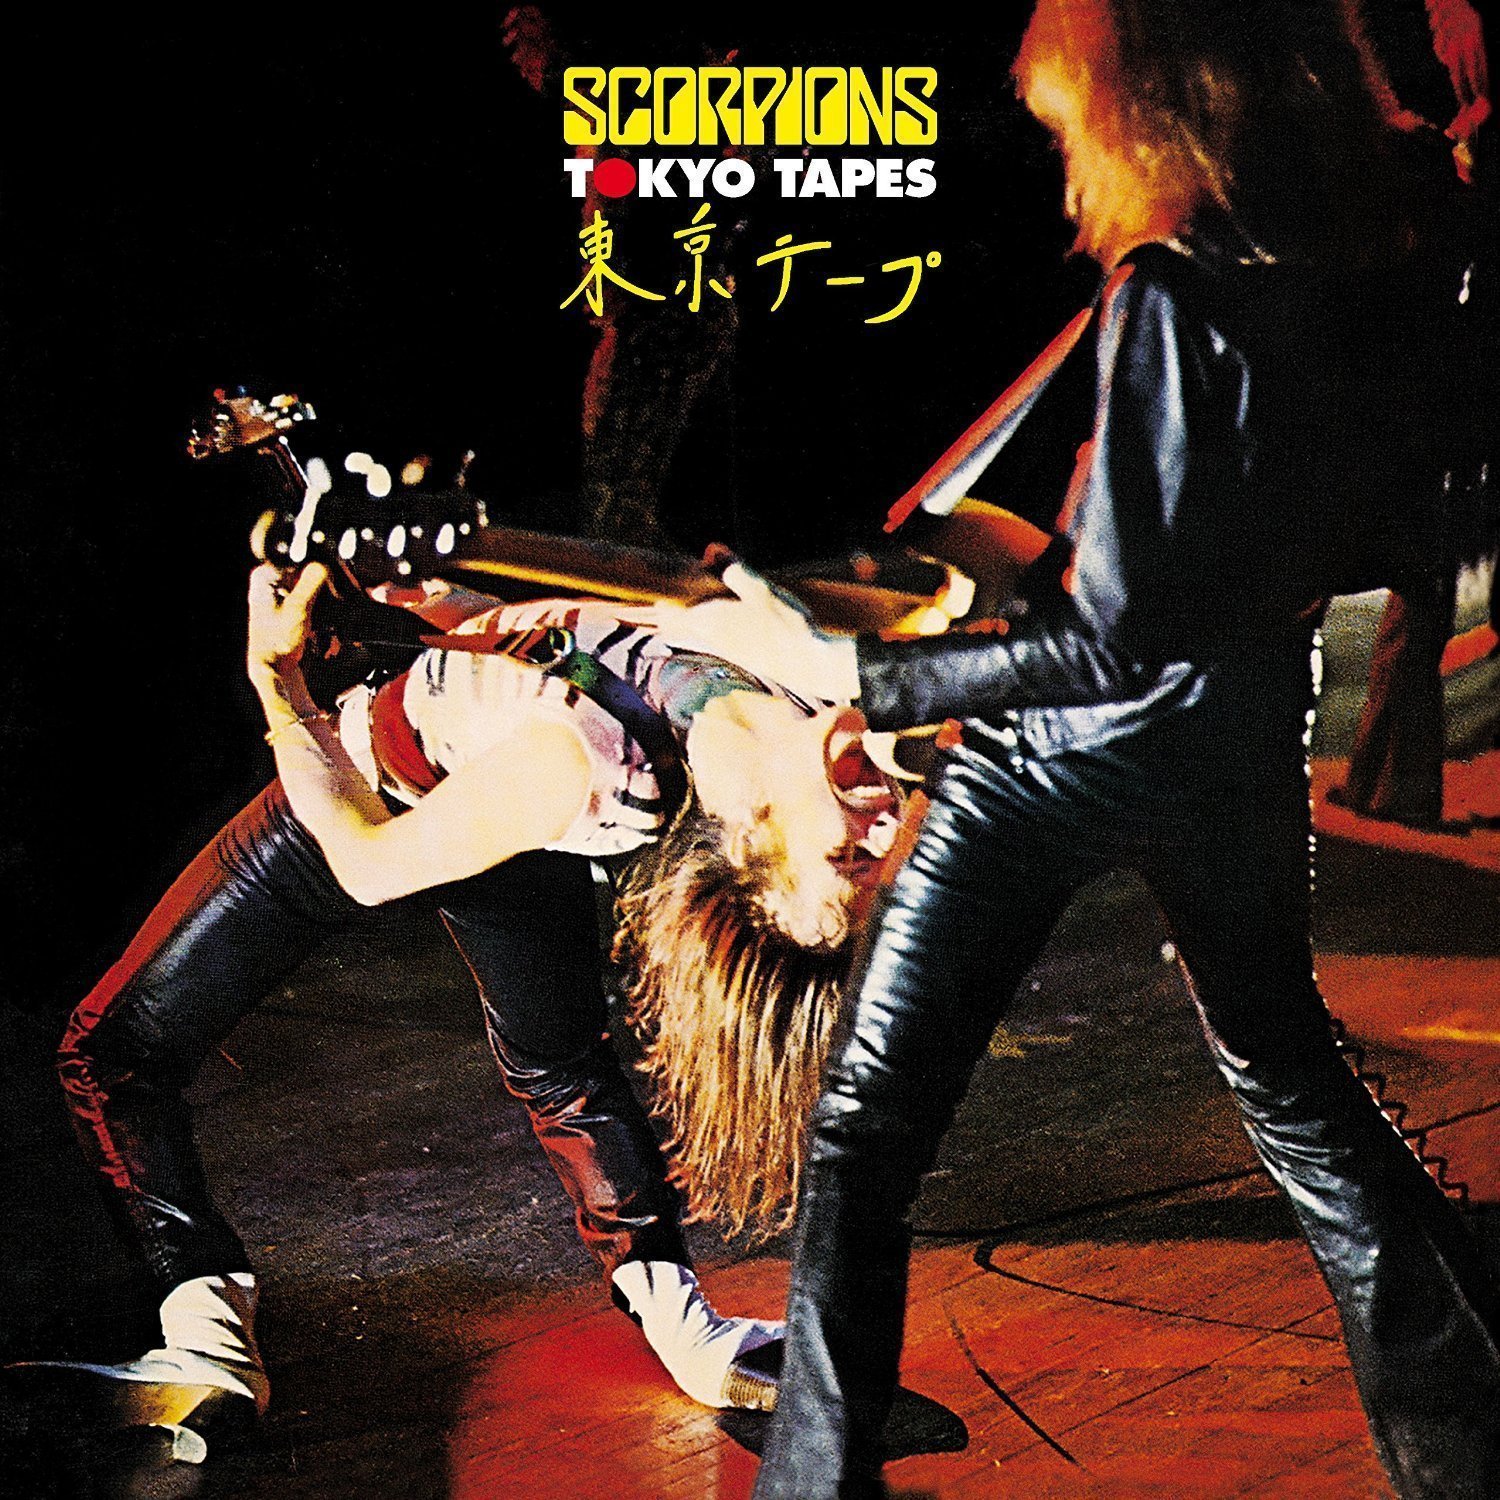 LP Scorpions - Tokyo Tapes - Live (2 CD + 2 LP)